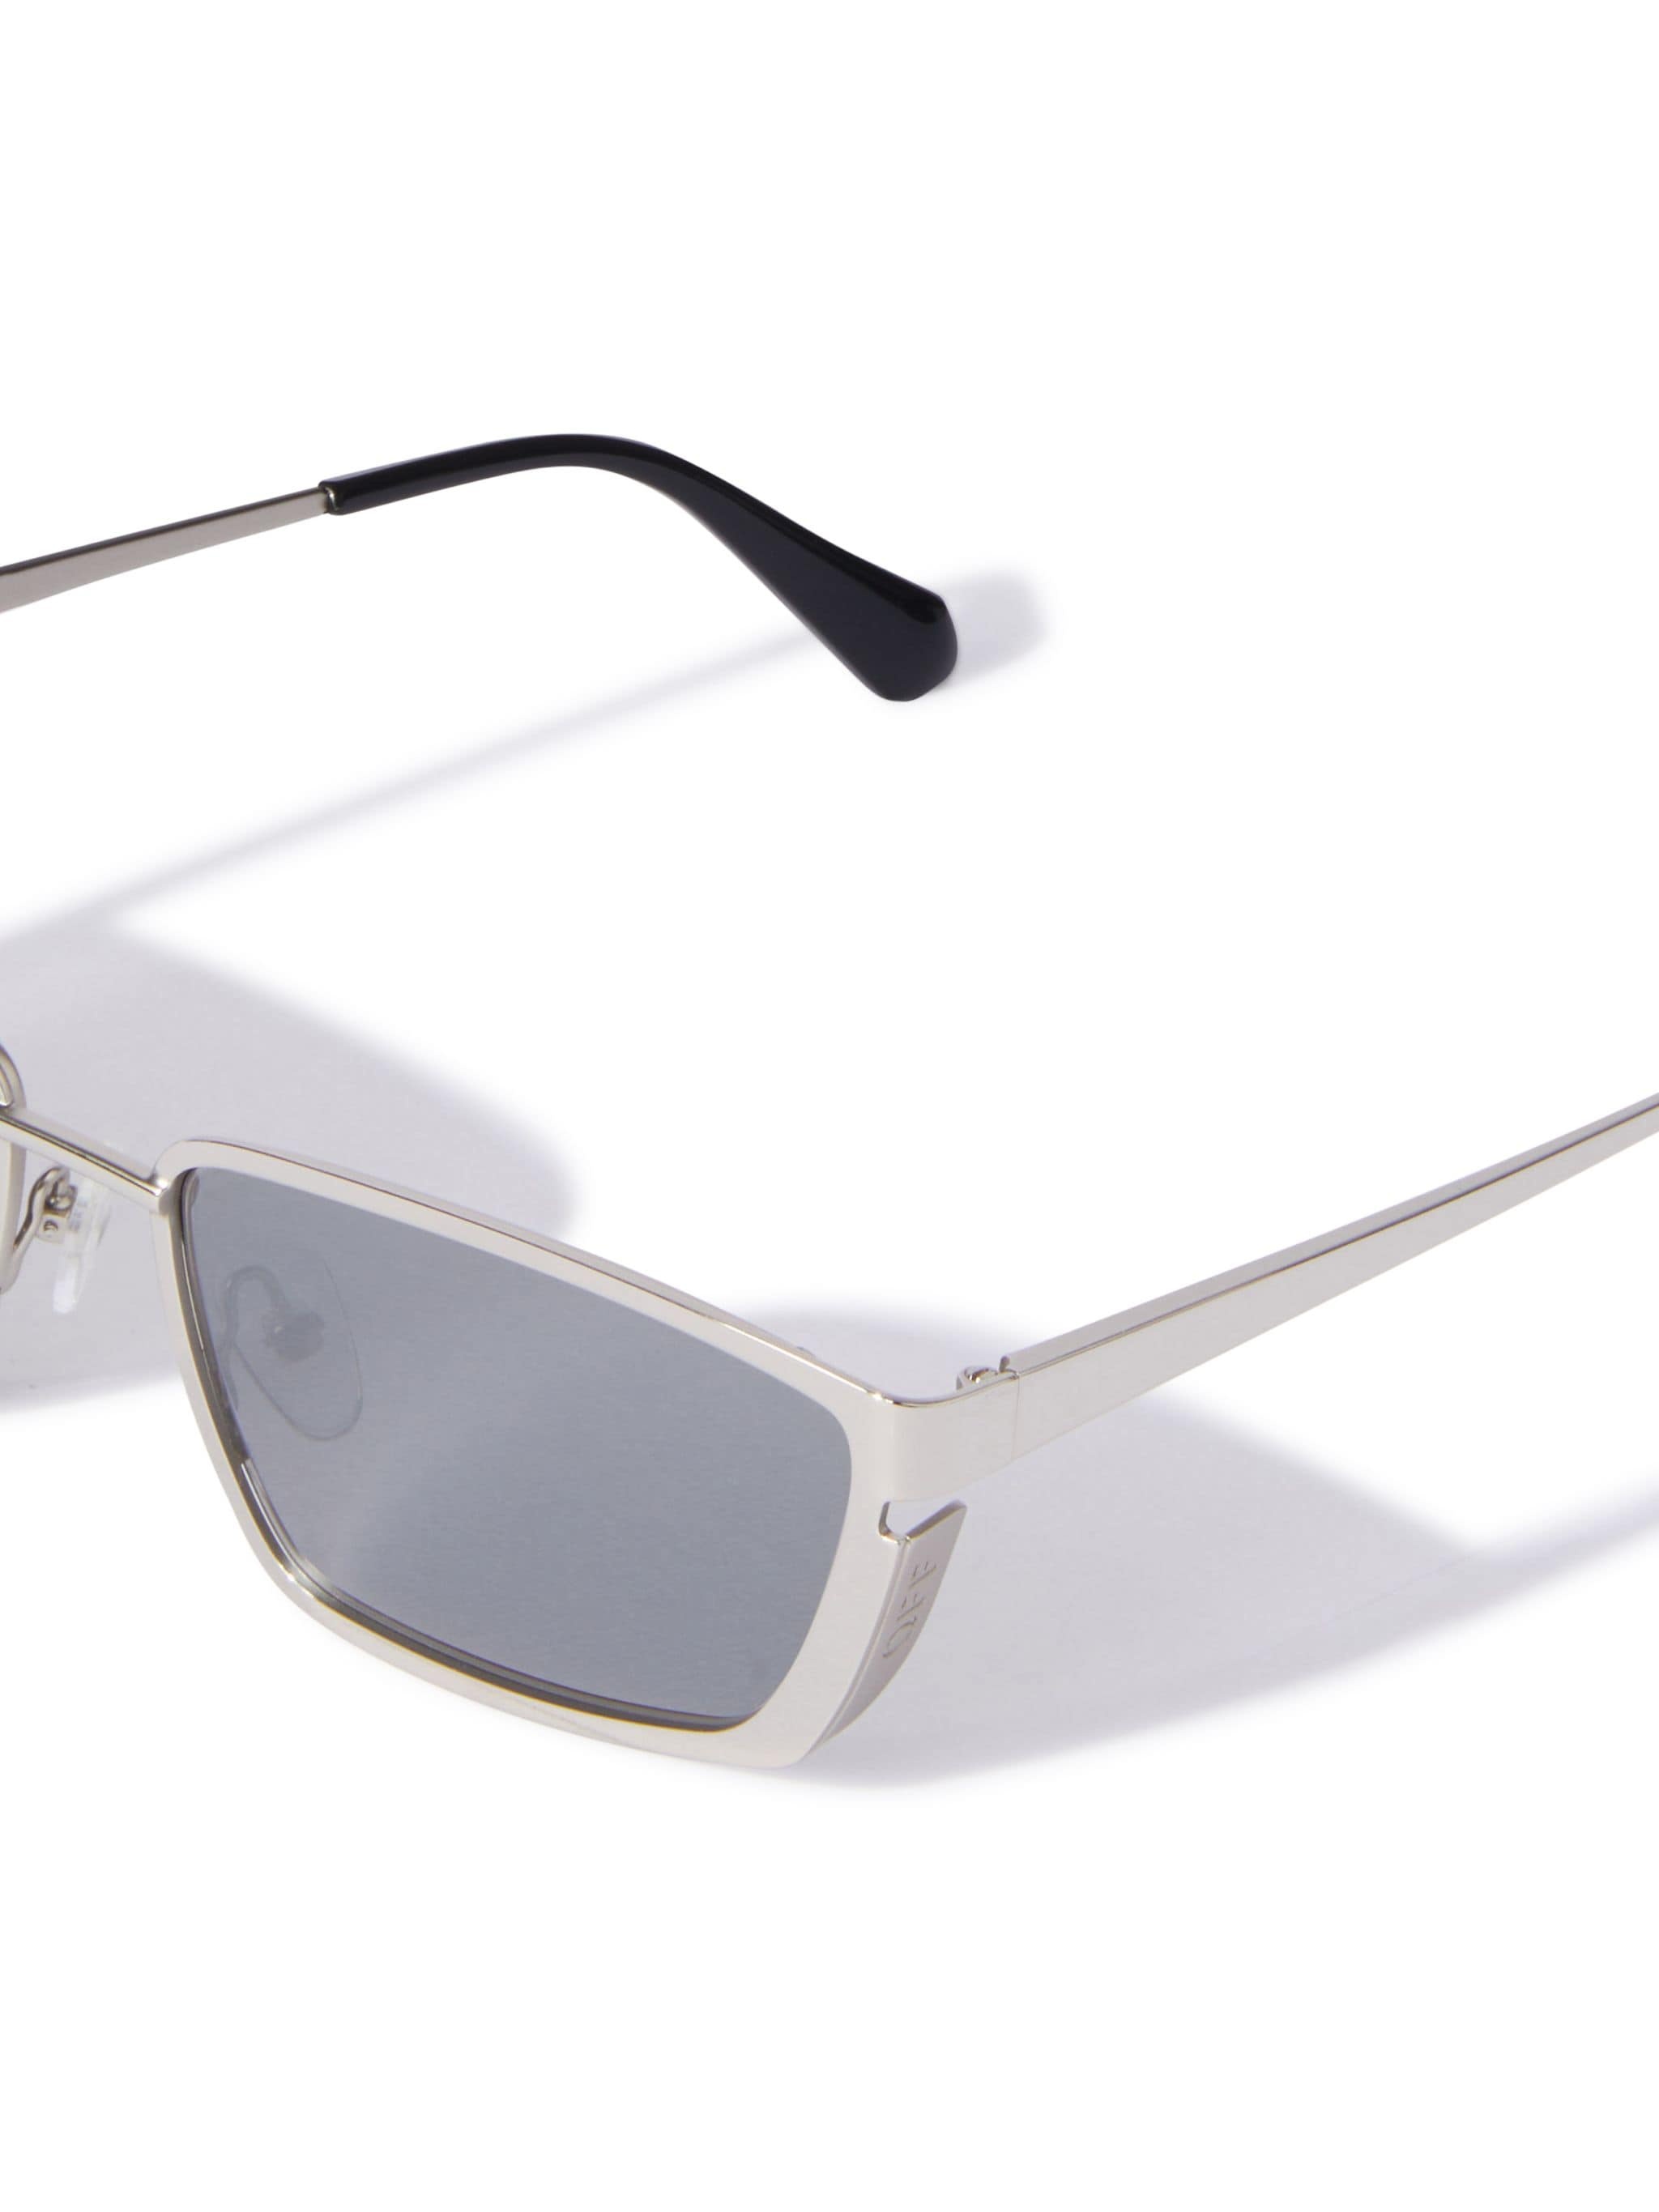 Richfield Sunglasses - 2